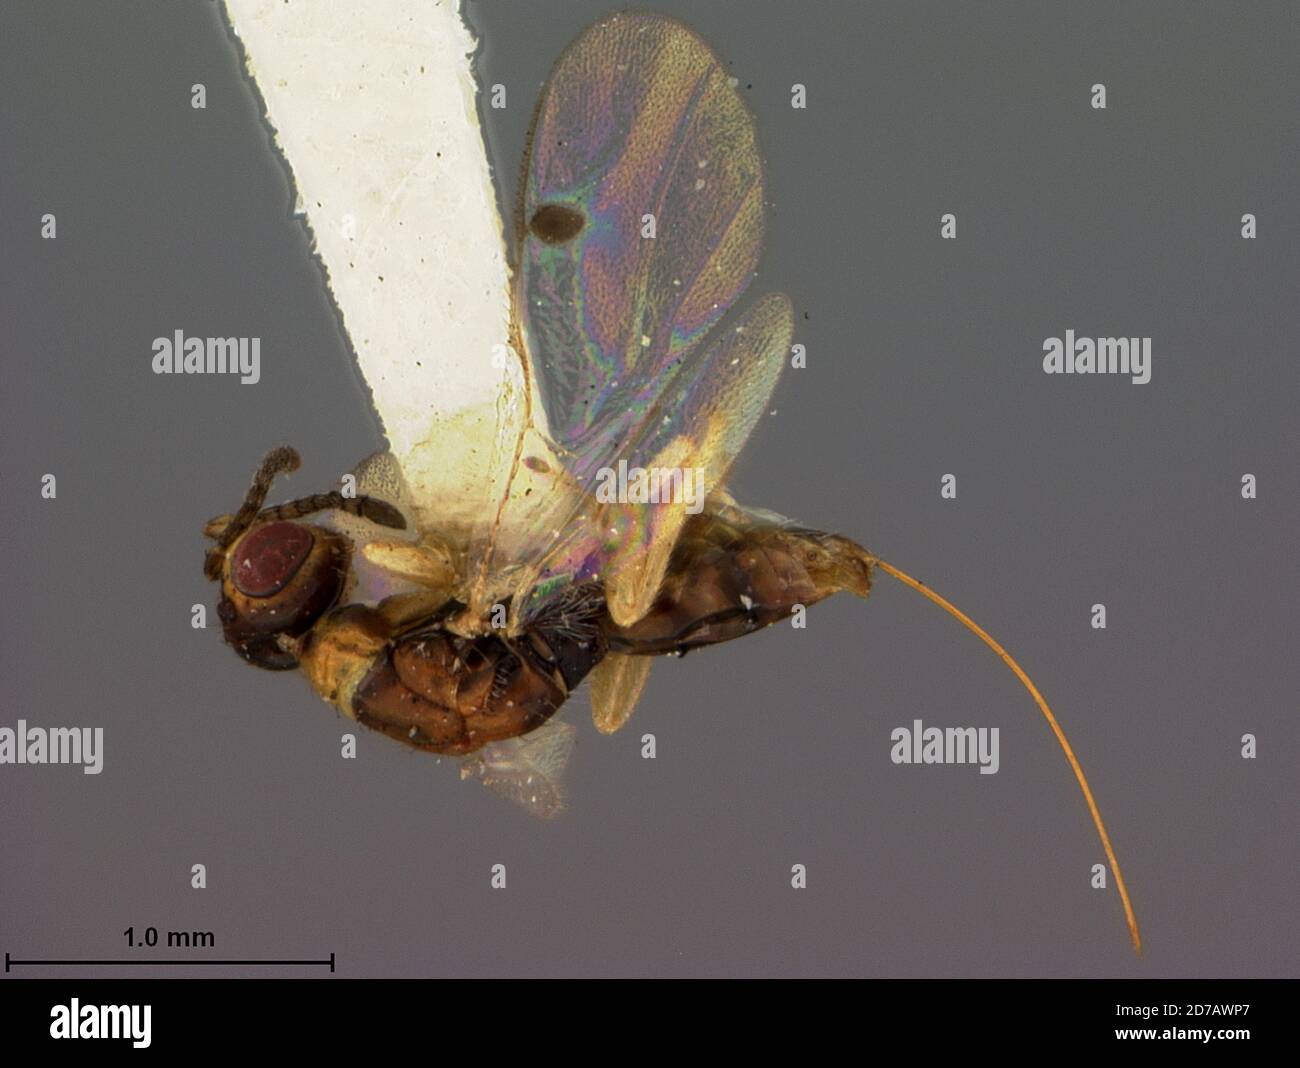 Sydney, New South Wales, Australia, Megastigmus brachyscelidis Ashmead, 1900, Animalia, Arthropoda, Insecta, Hymenoptera, Torymidae Stock Photo